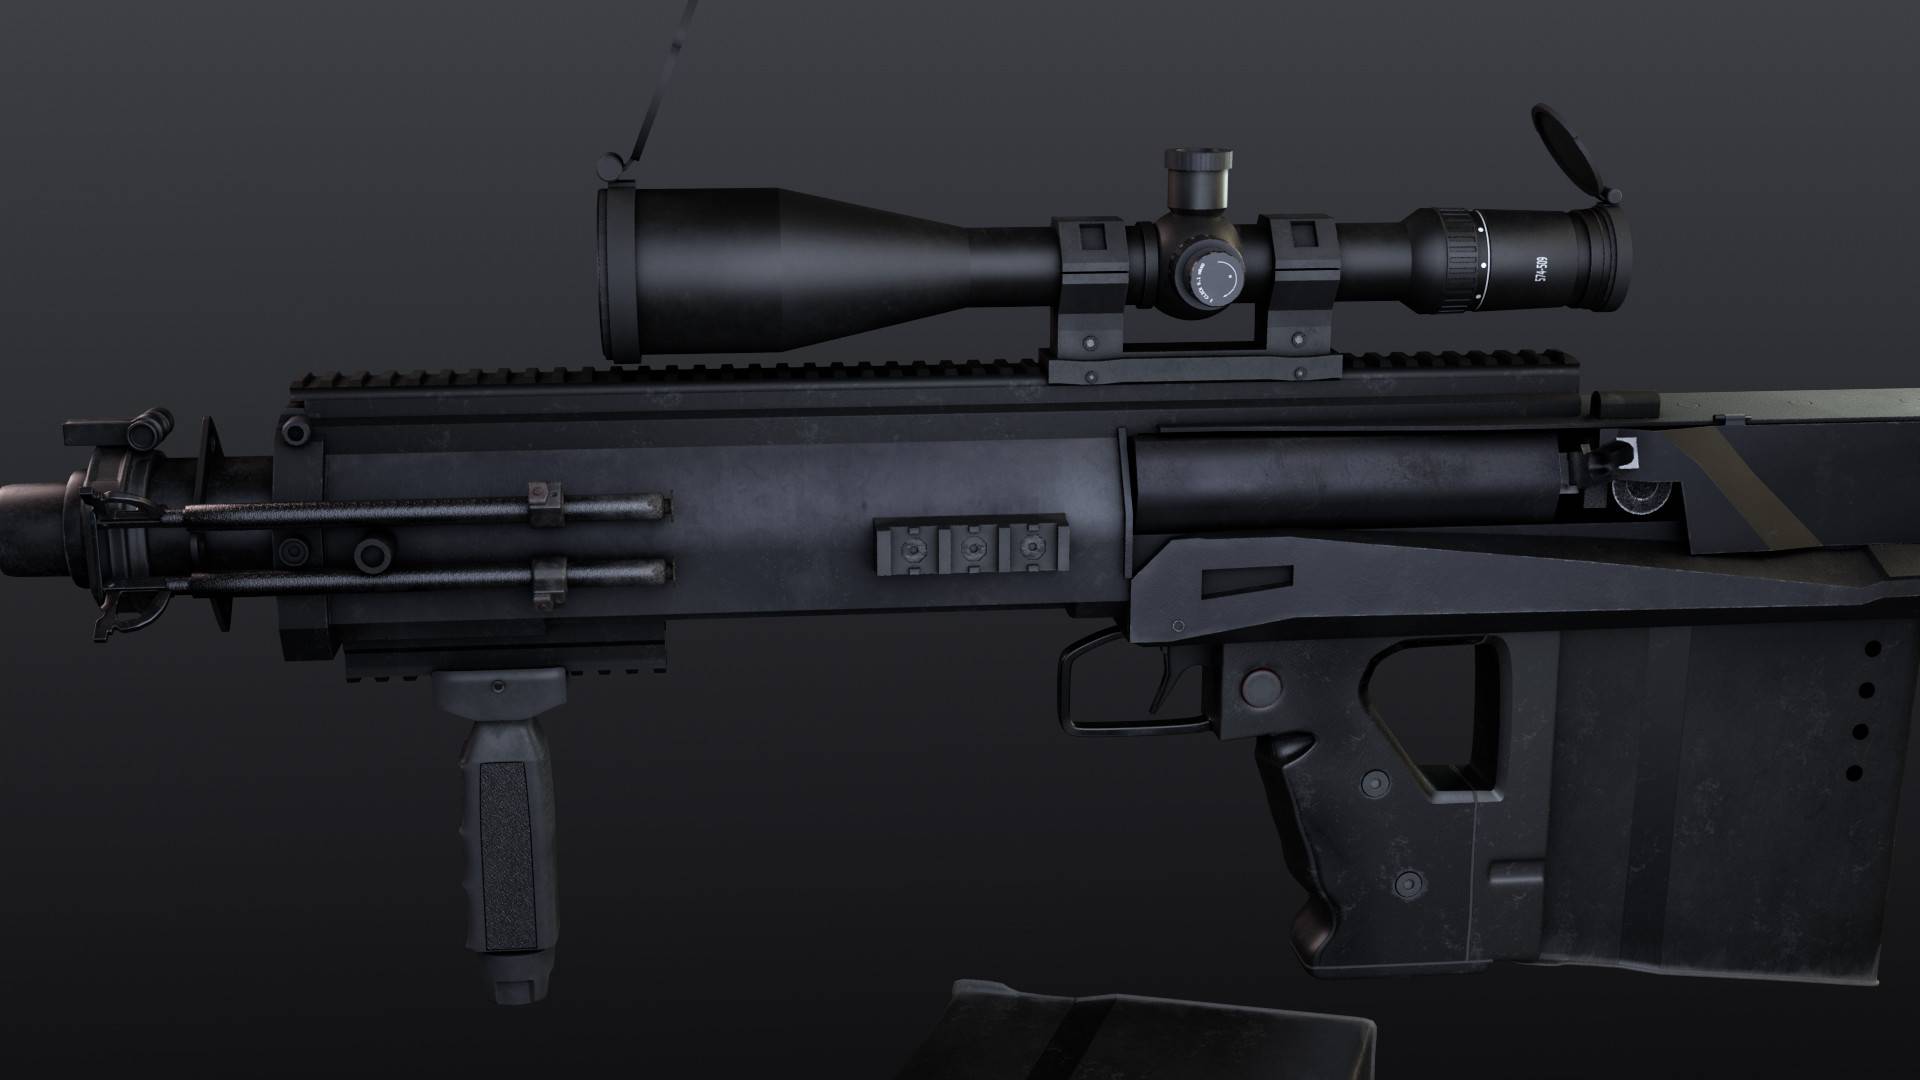 Rpa bmf rangemaster снайперская винтовка — характеристики, фото, ттх